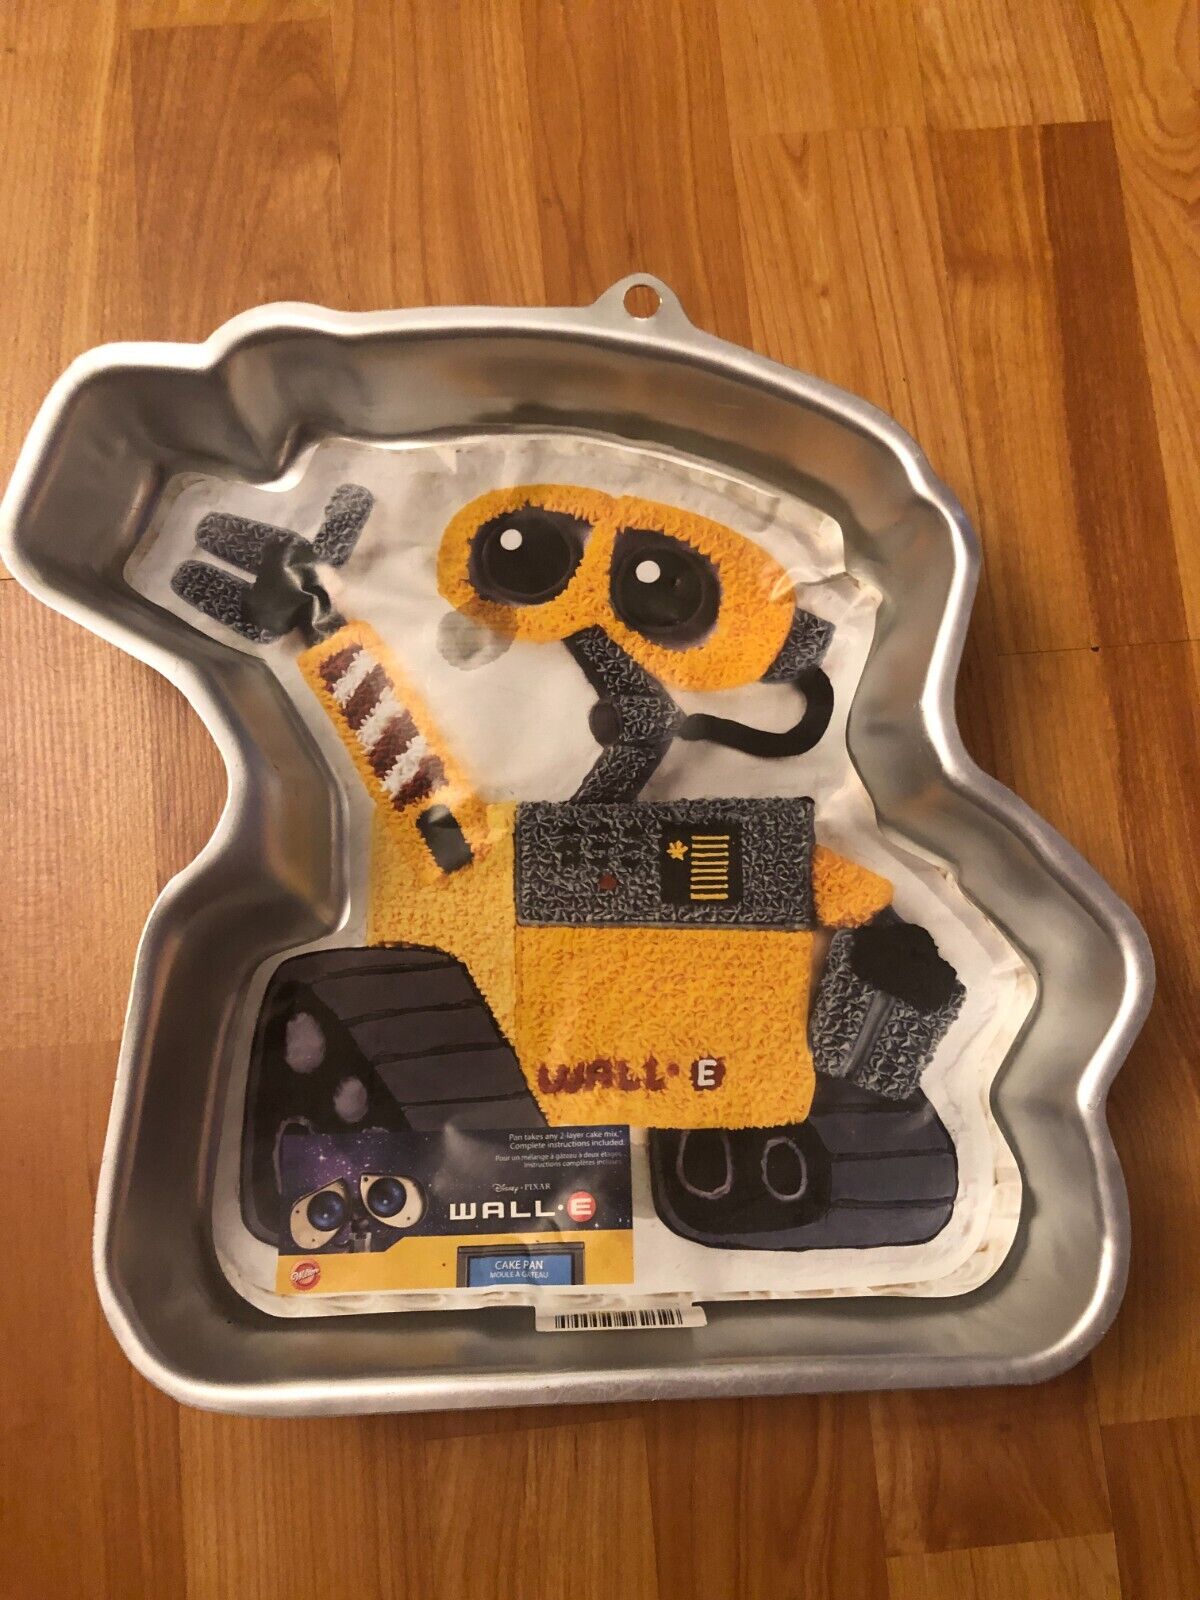 Wilton Cake Pan Disney Pixar WALL-E #2105-9999 New Mold Cake Pan, Instructions